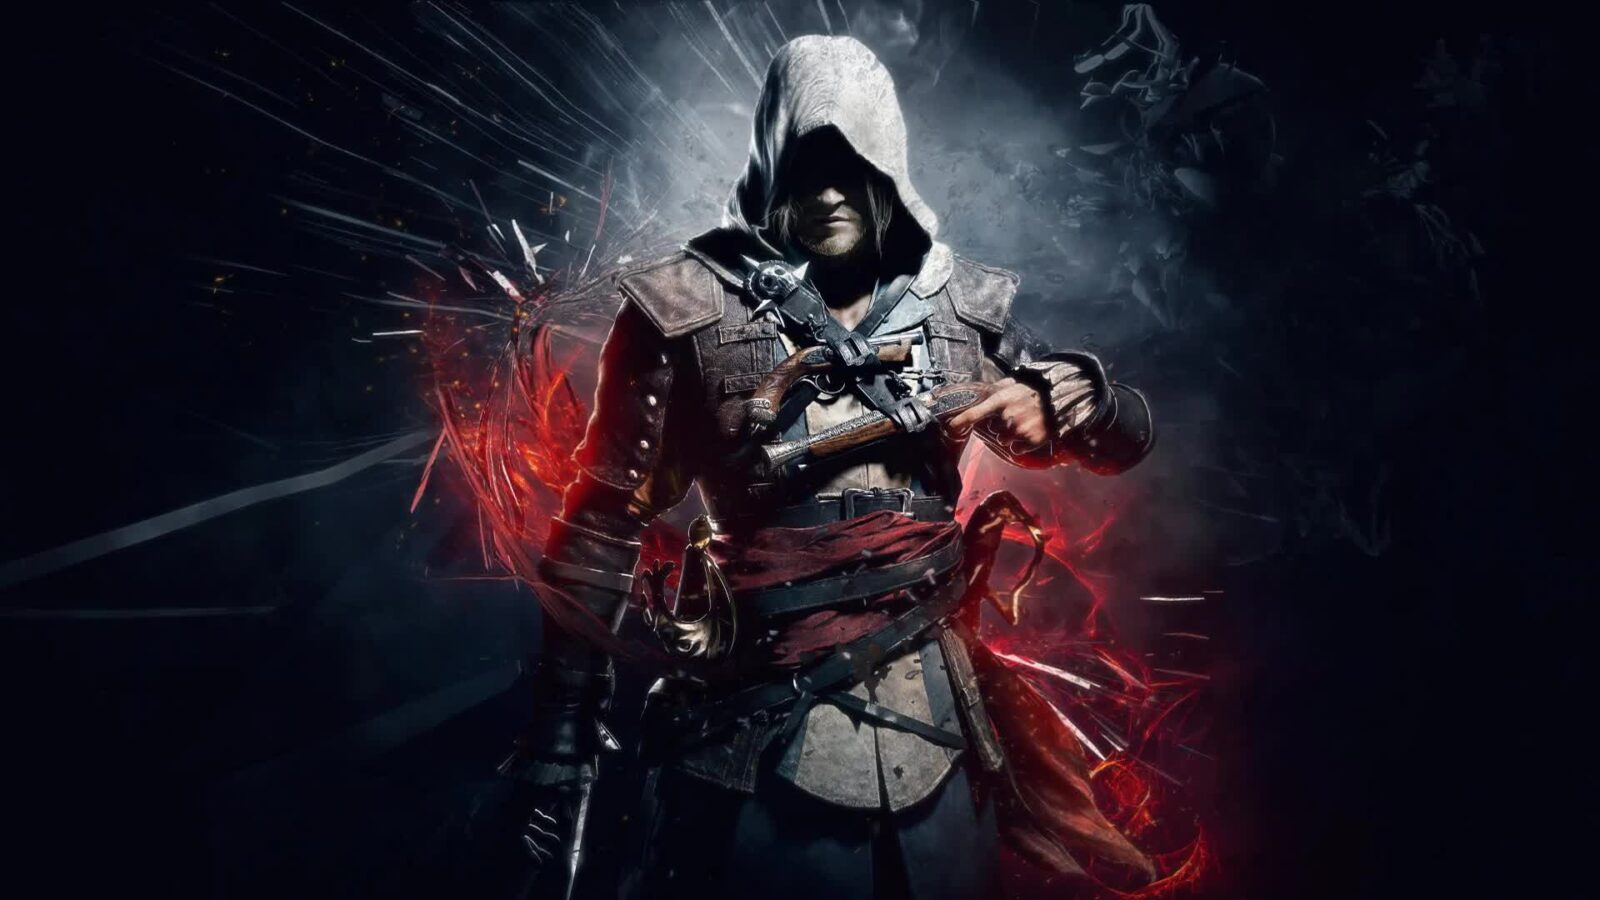 LiveWallpapers4Free.com | Assassins Creed IV Black Flag - Free Live Wallpaper